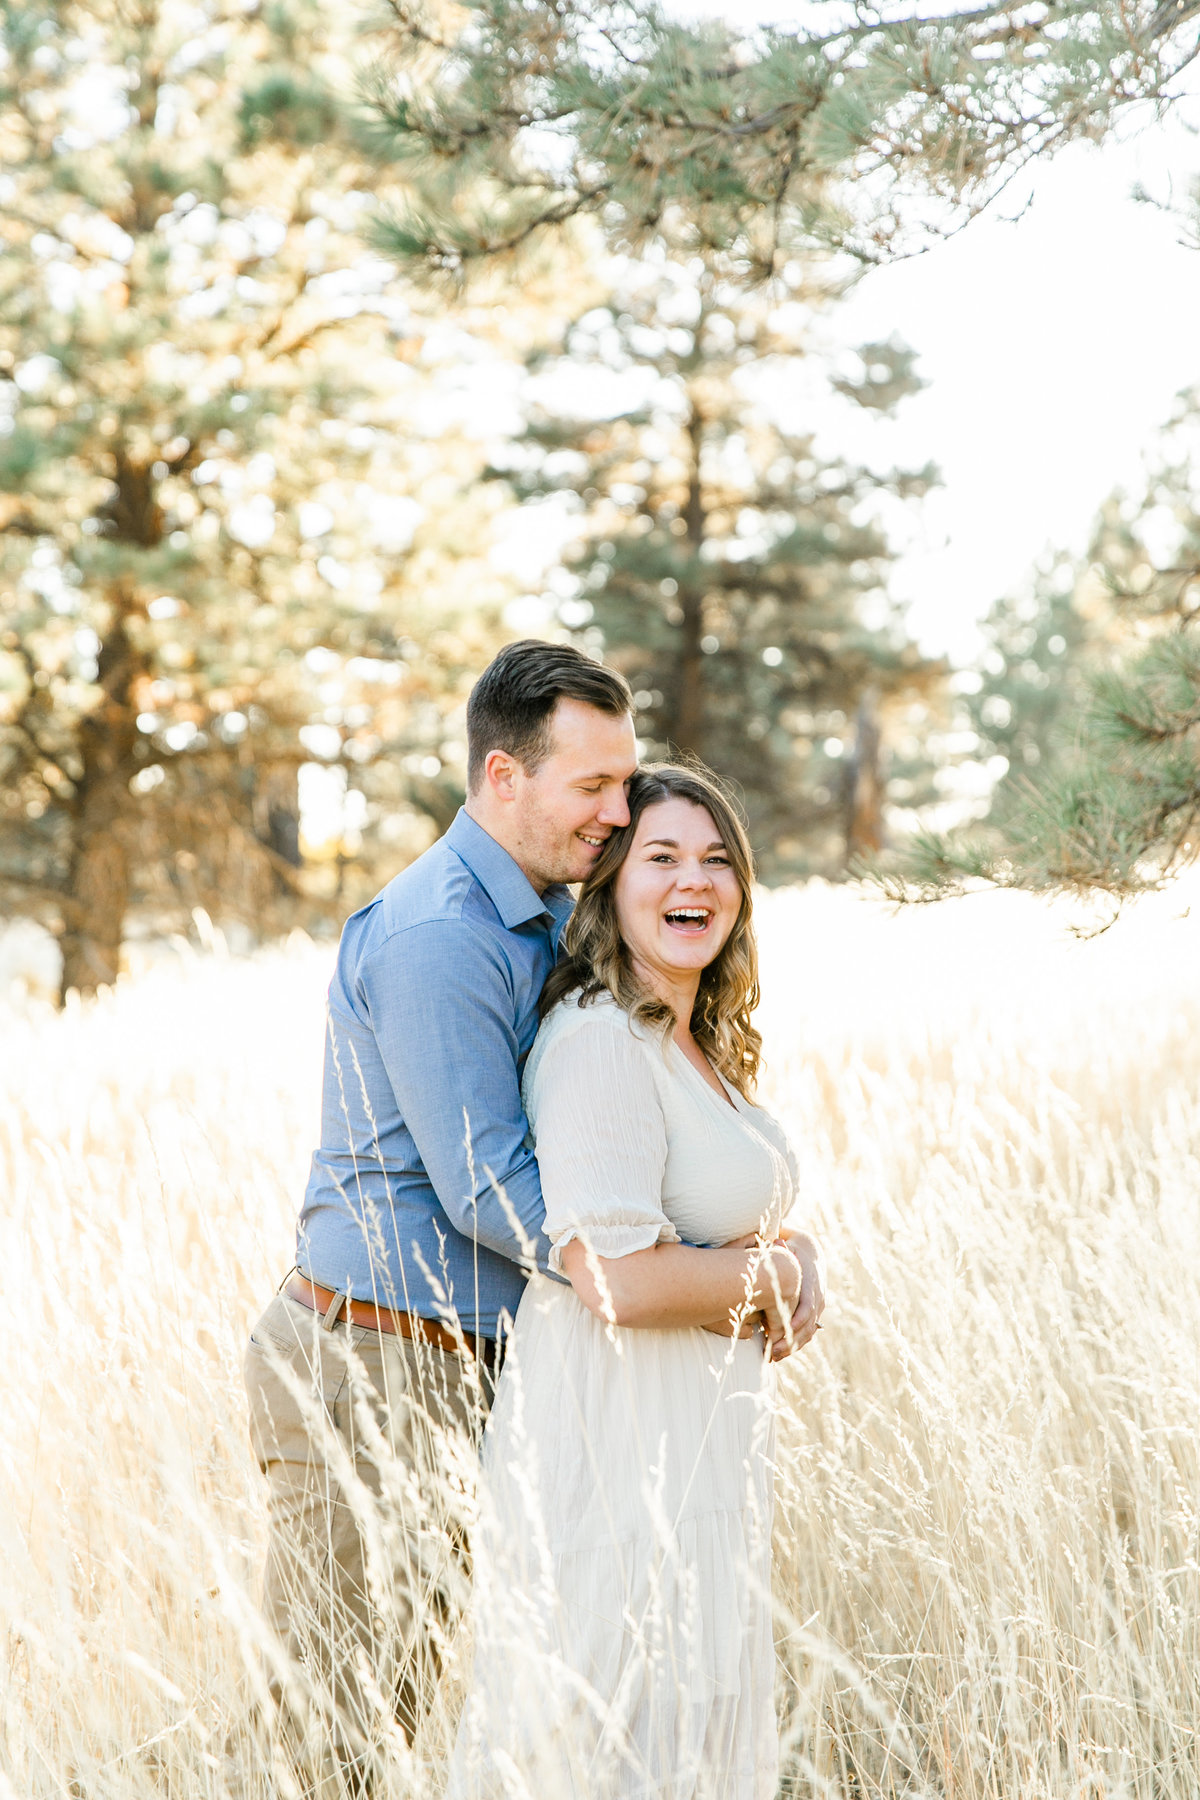 Karlie Colleen Photography - Flagstaff Arizona Engagement Photographer - Britt & Josh -130